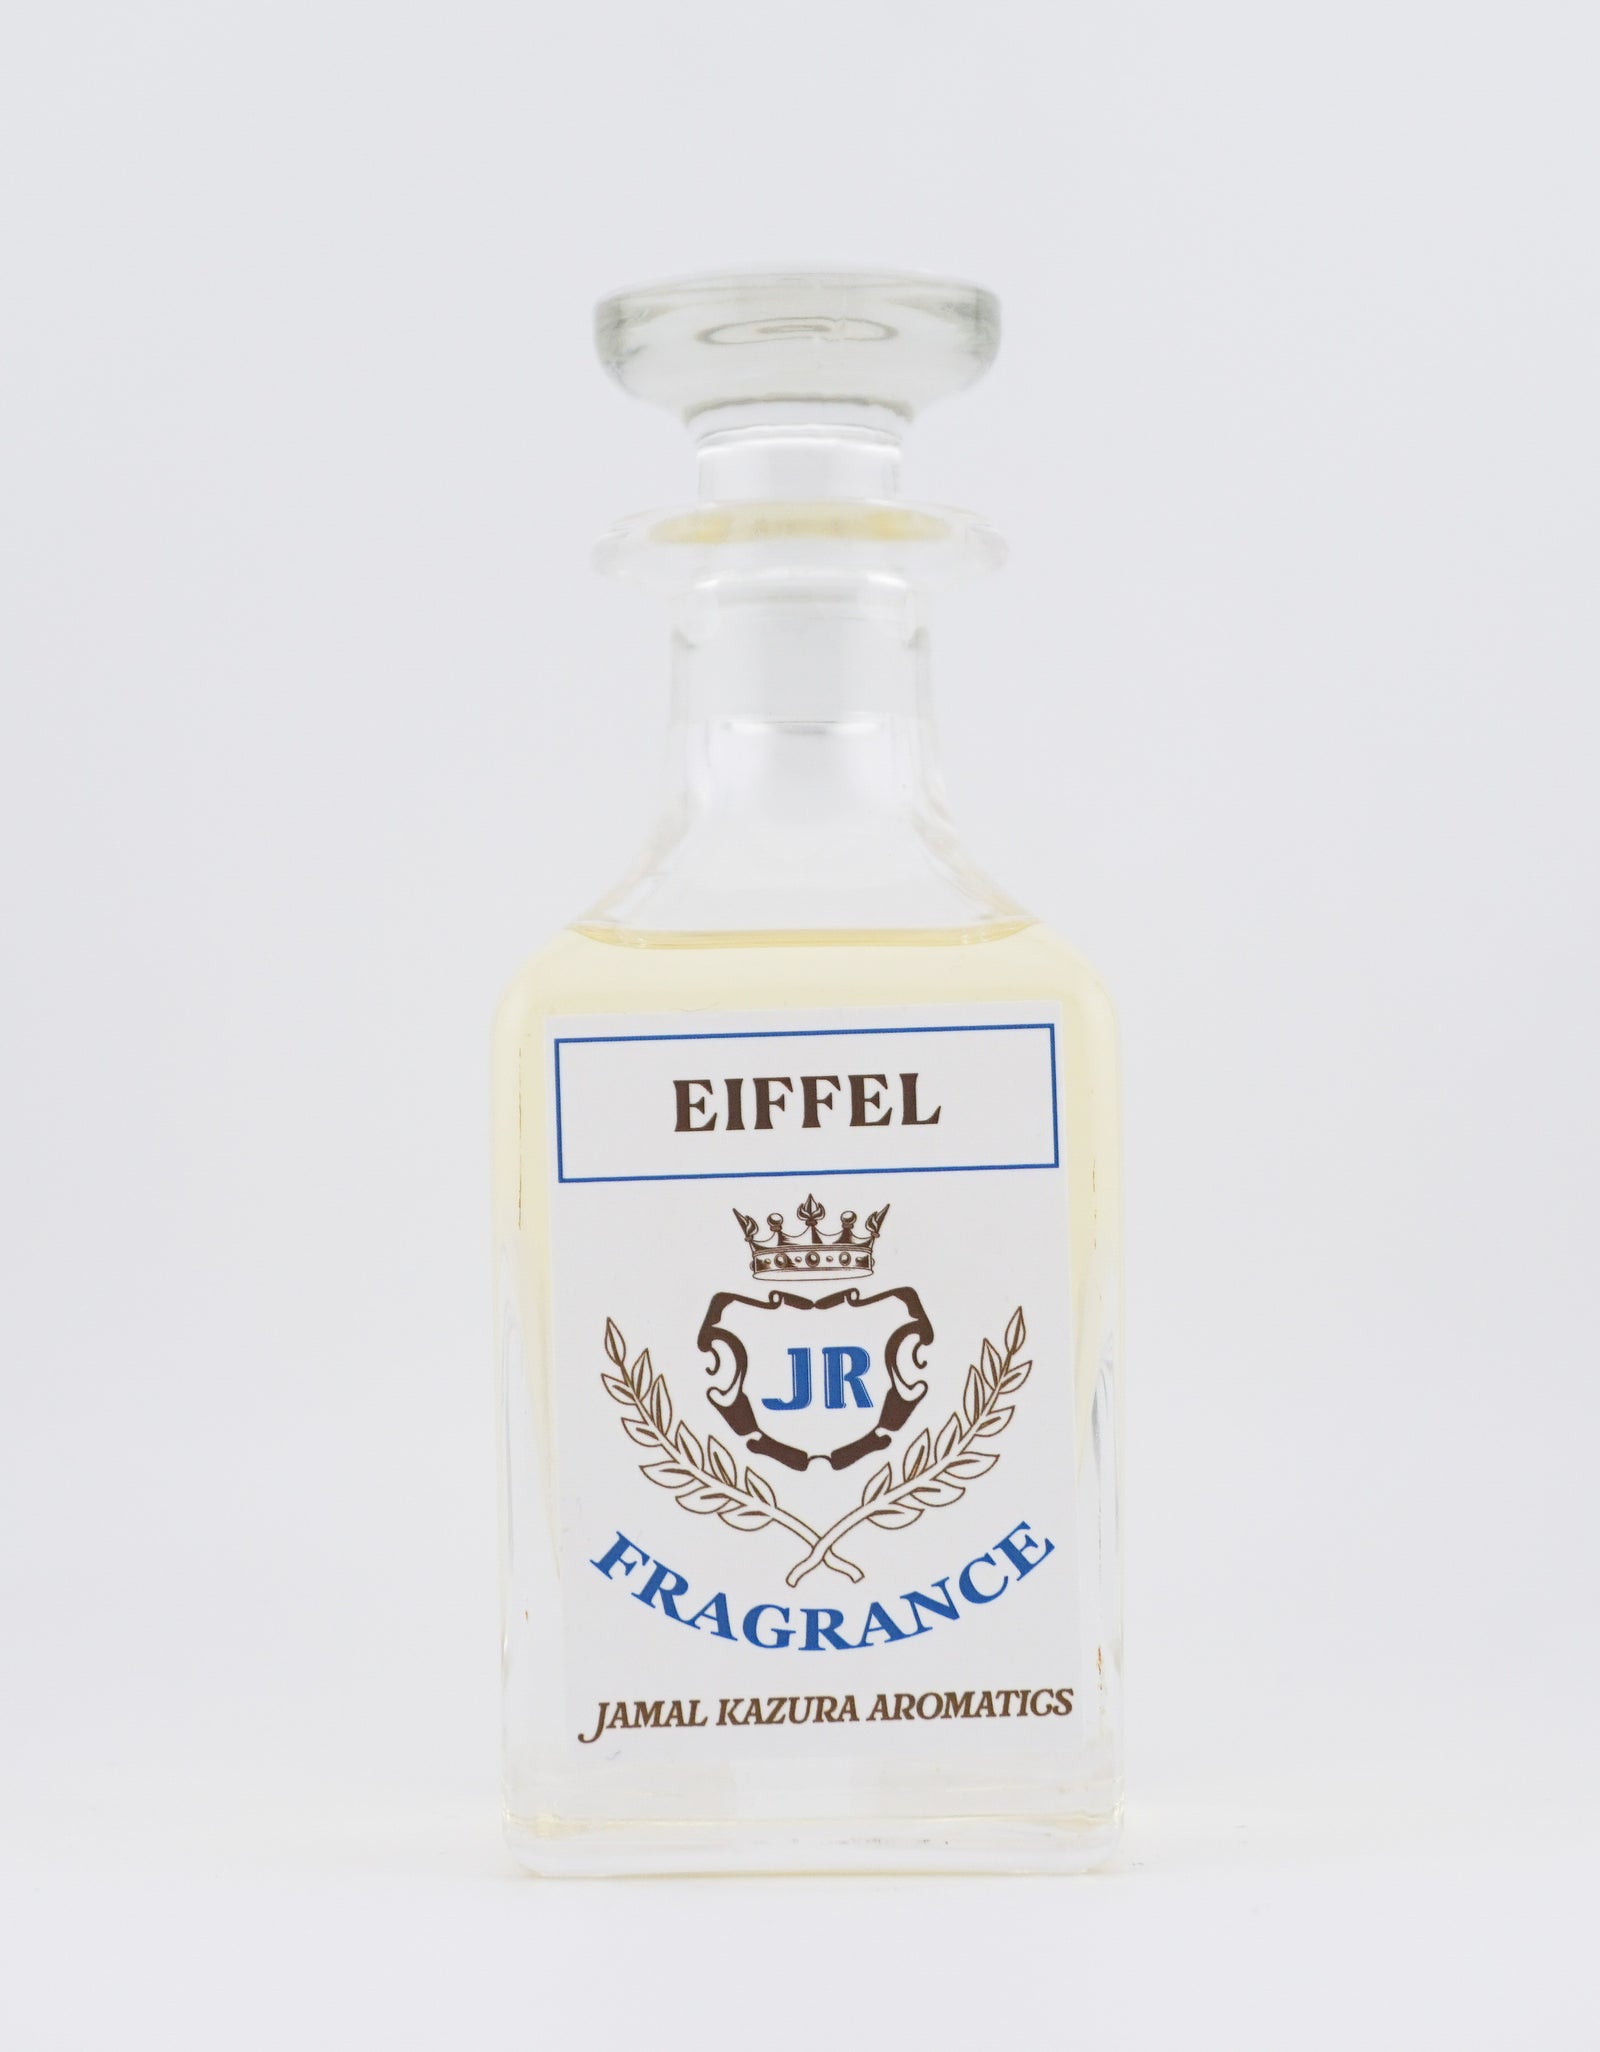 EIFFEL Perfume Decanters - Jamal Kazura Aromatics